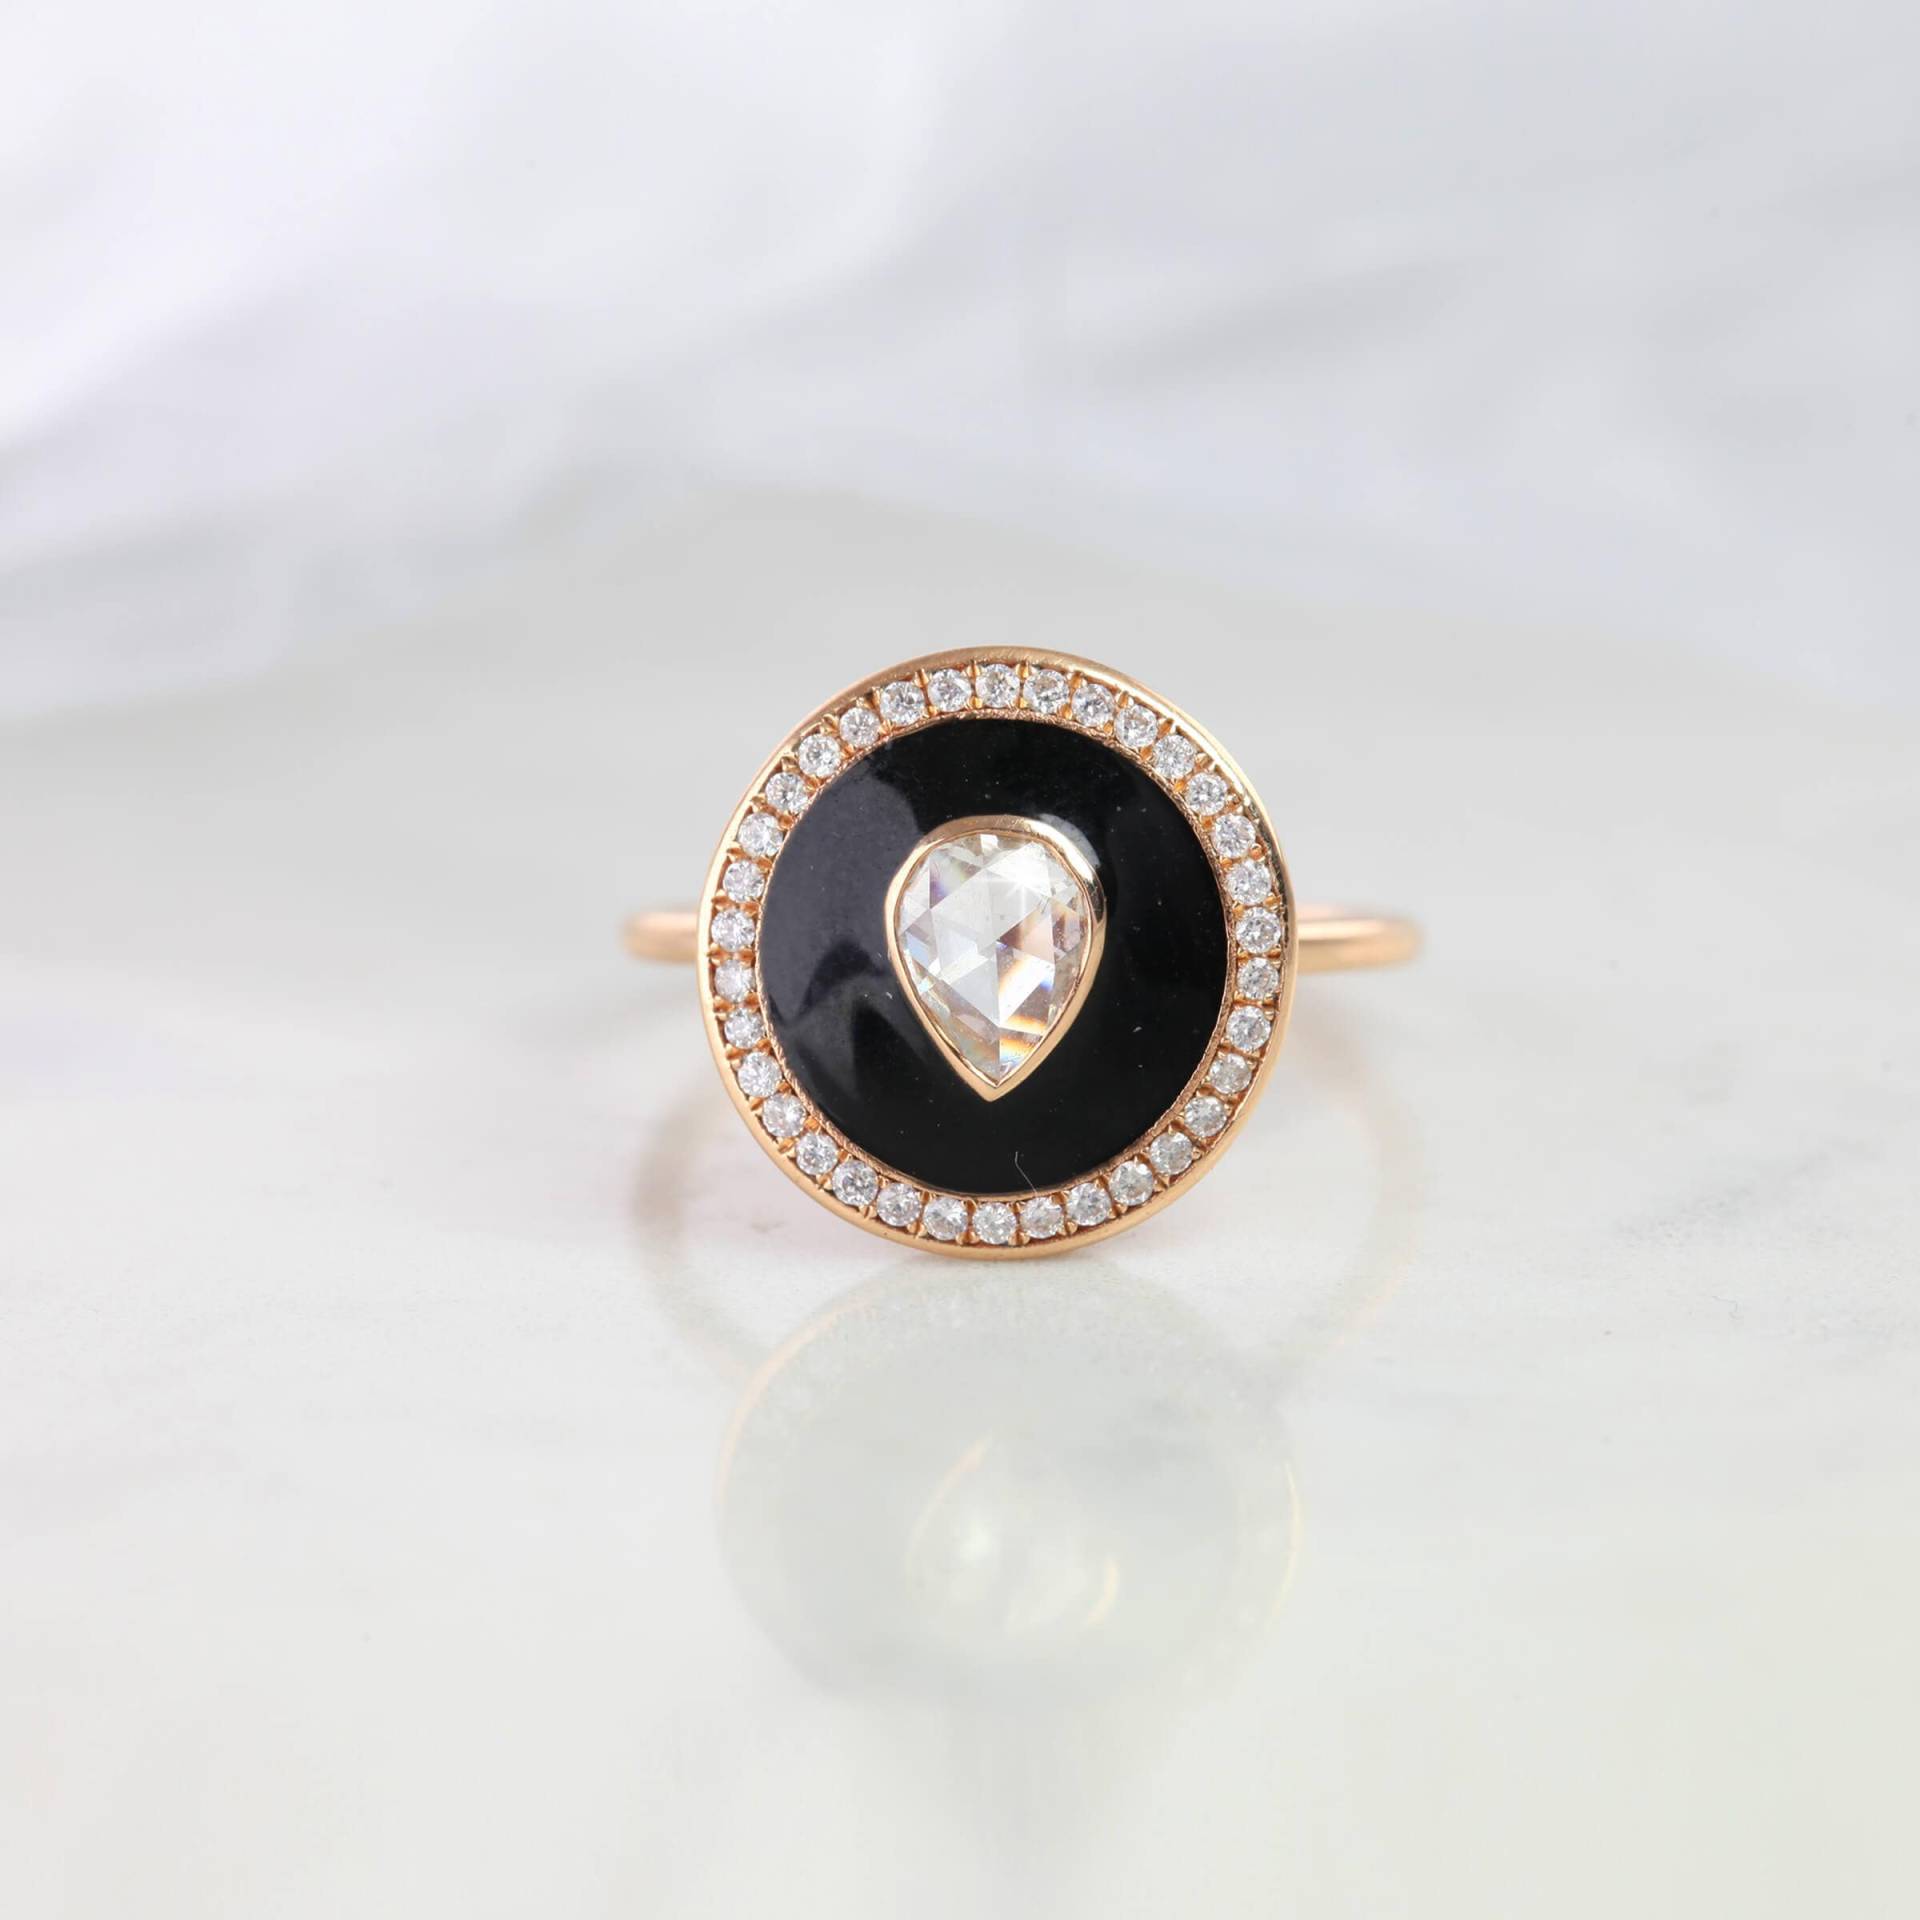 Art Deco Pear Cut Rosenschnitt Diamant Ring, Artdeco Form Rosecut Schwarz Emailliert Roségold Ring Mit Pave Setting Verlobung Statement von DiamondsVivid